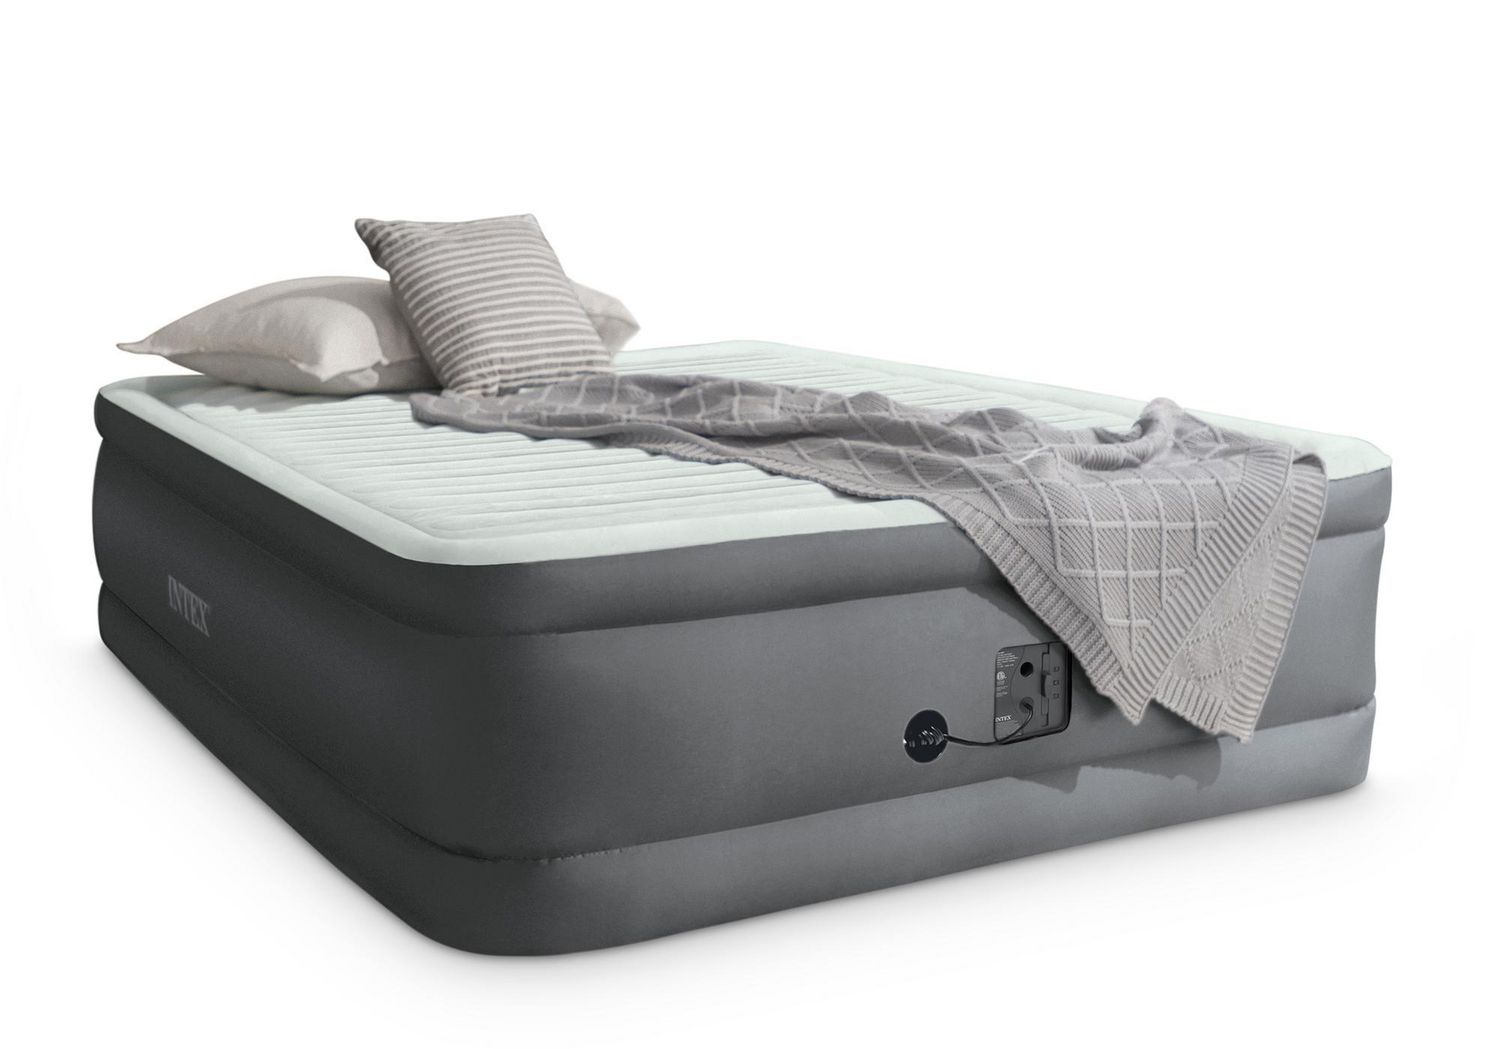 premaire air mattress review